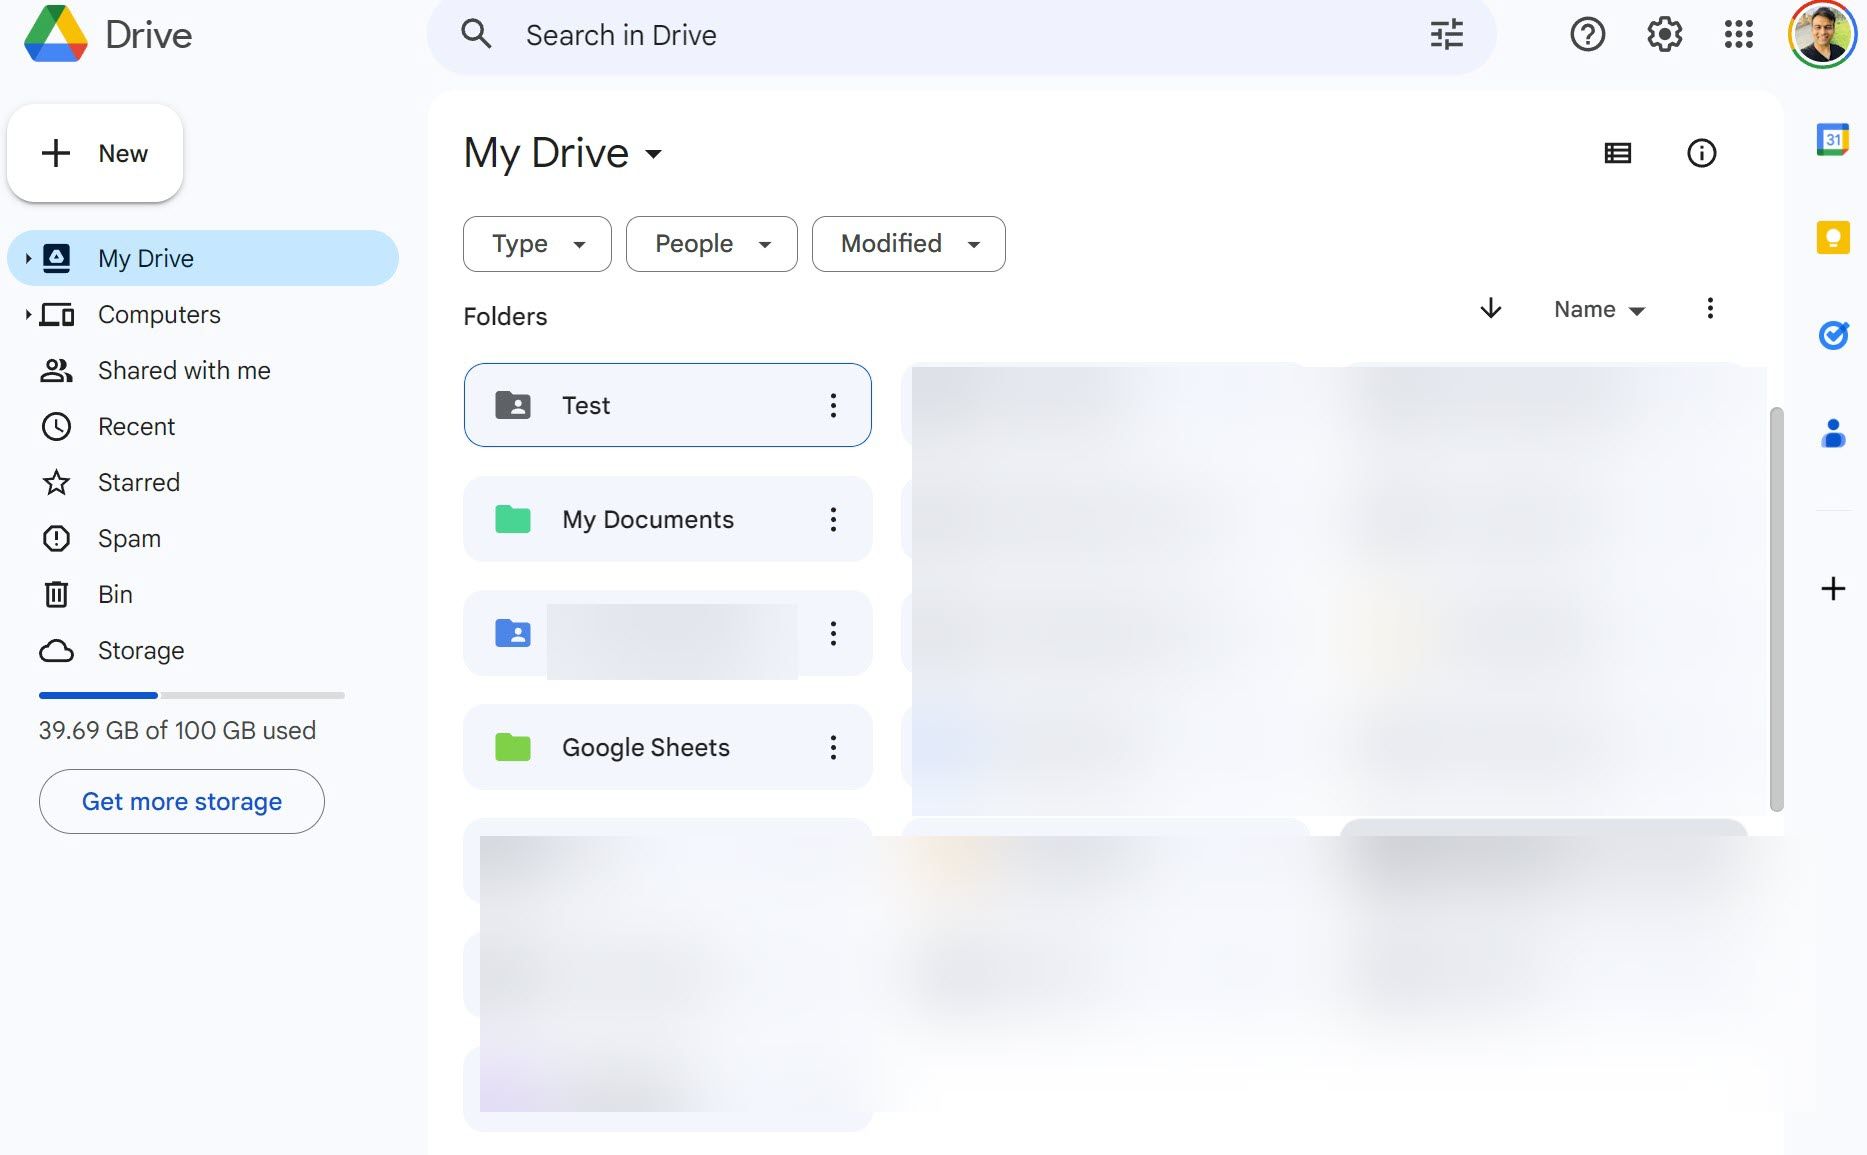 Google Operating System: New Google Drive Interface